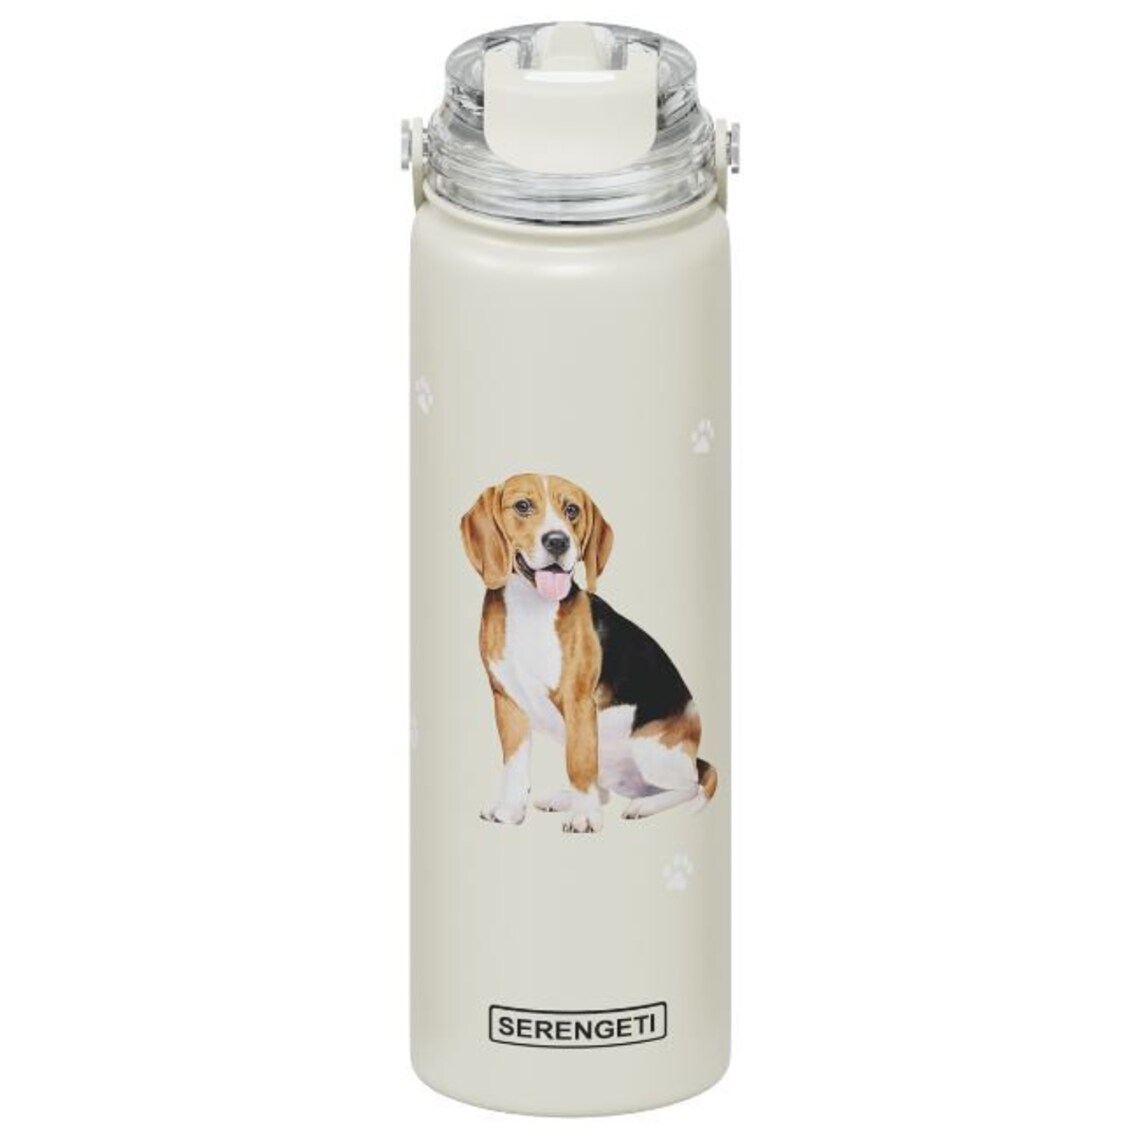 SERENGETI Stainless Steel Water Bottle 24oz - Beagle